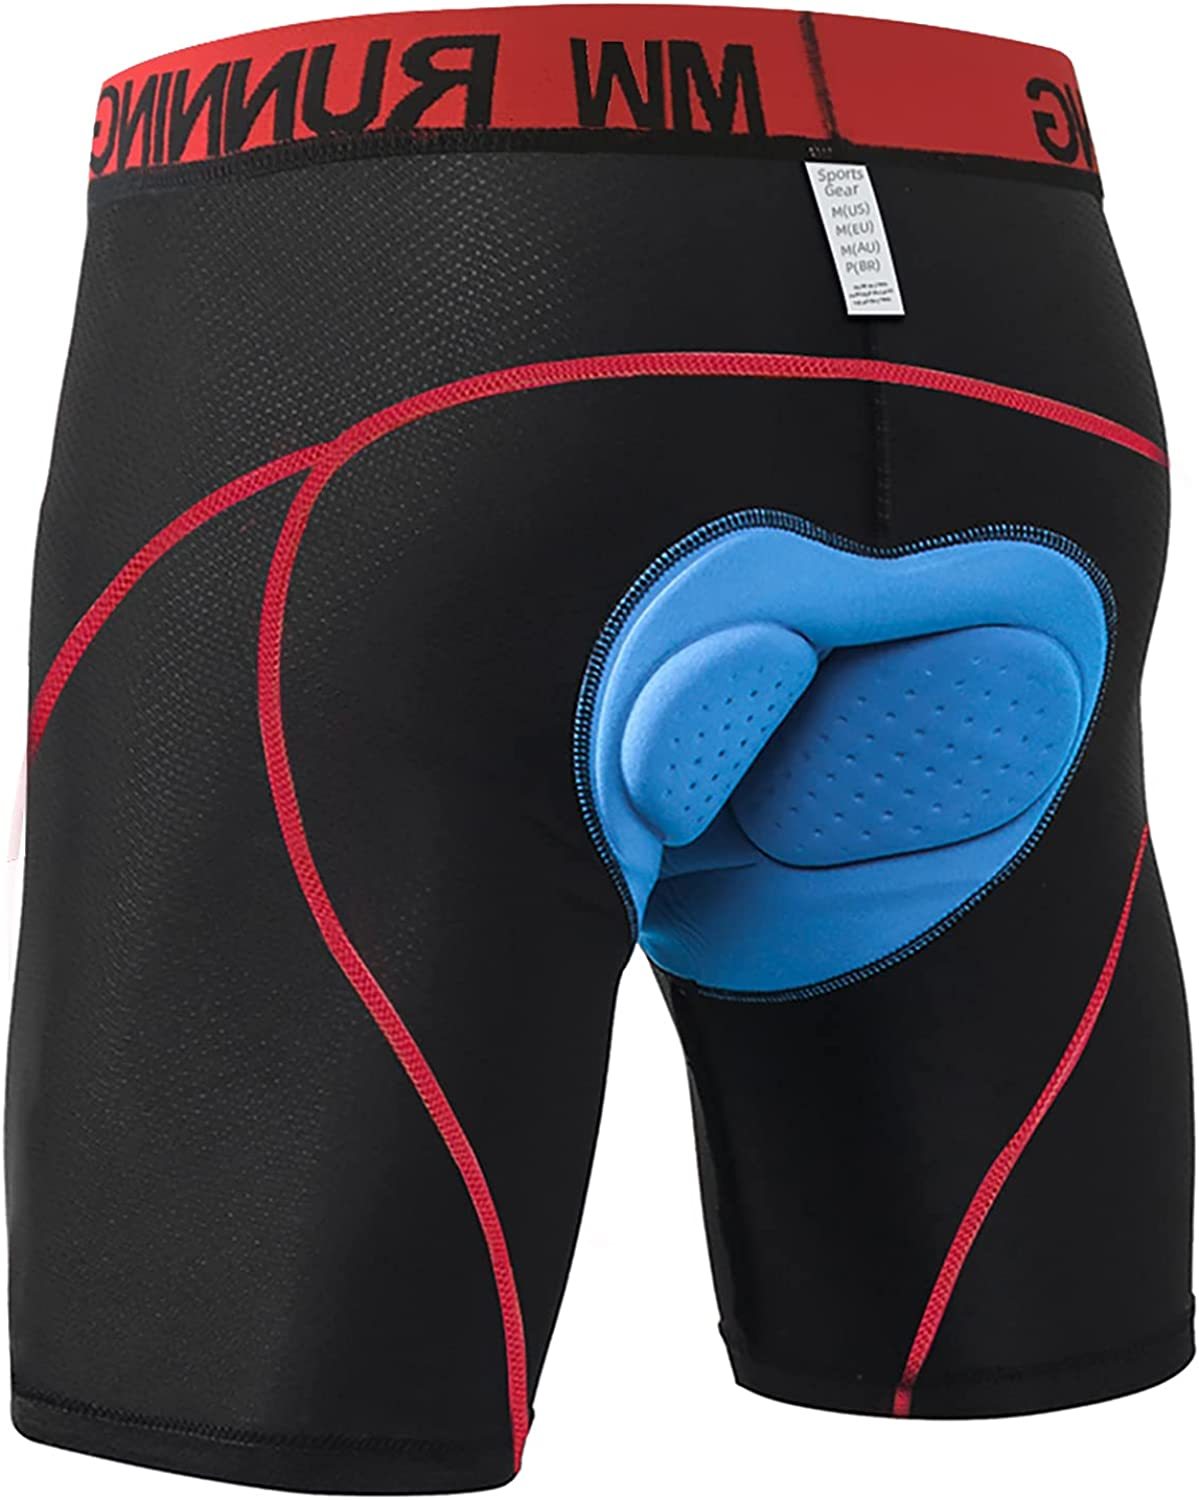 RiToEasysports Cycling Underwear, Elastic Breathable Mesh 3D Silicone  Padded Bike Shorts Padding Cycling Underwear